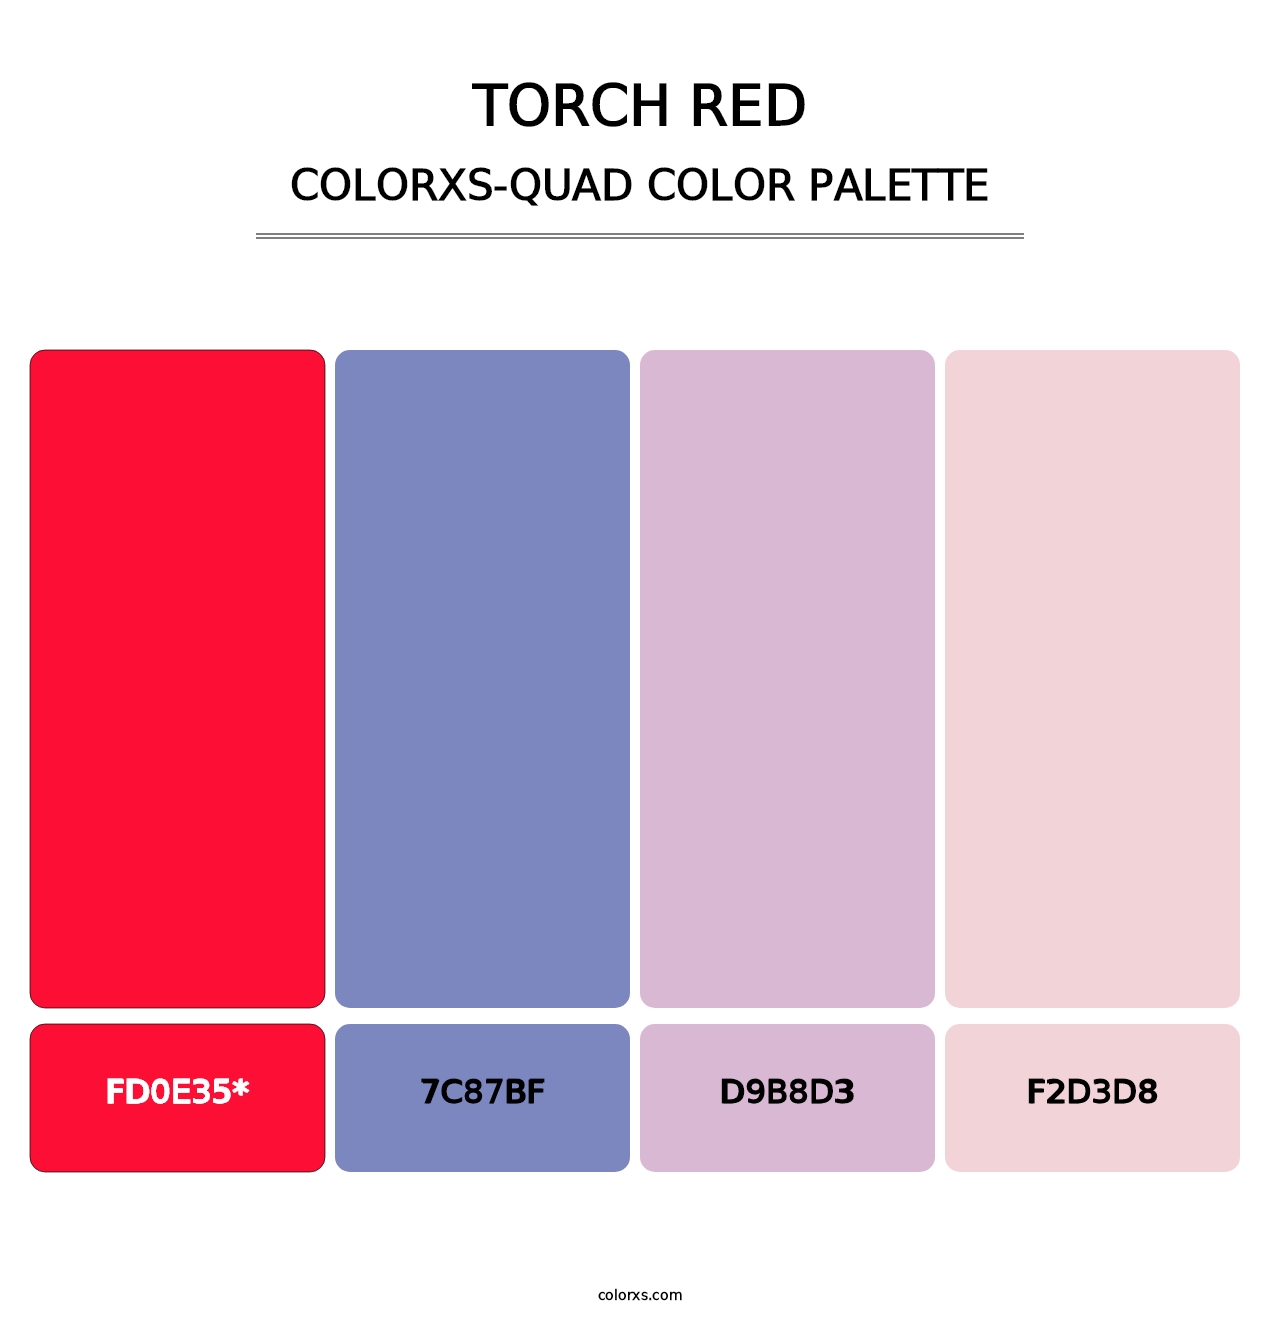 Torch Red - Colorxs Quad Palette